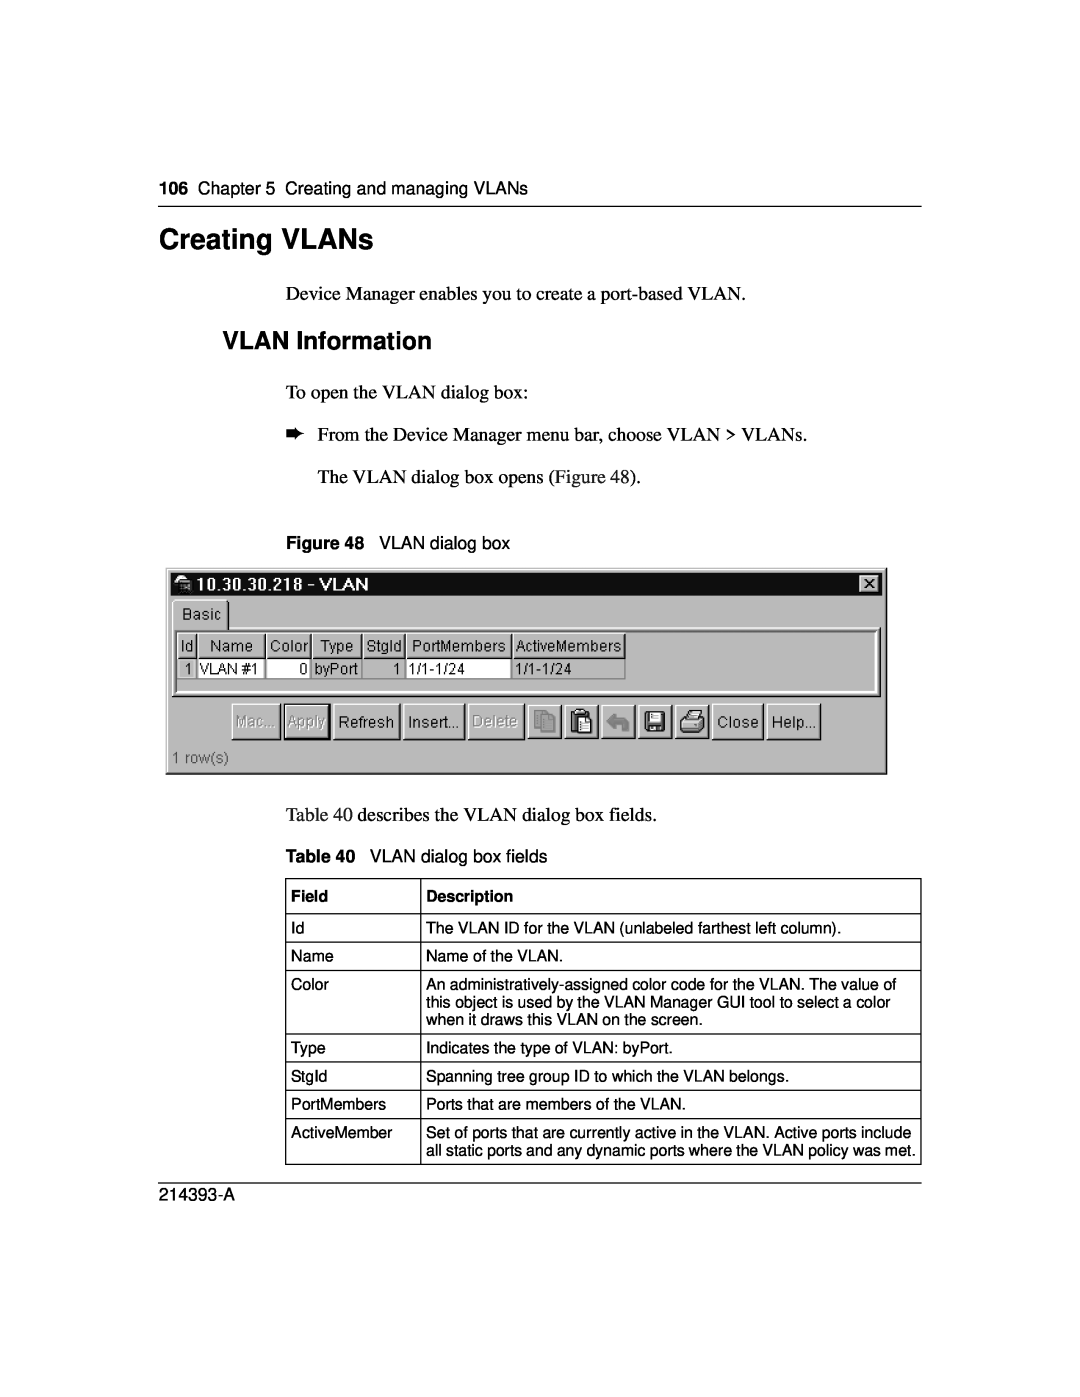 Nortel Networks 214393-A manual Creating VLANs, VLAN Information, 106Chapter 5 Creating and managing VLANs, VLAN dialog box 